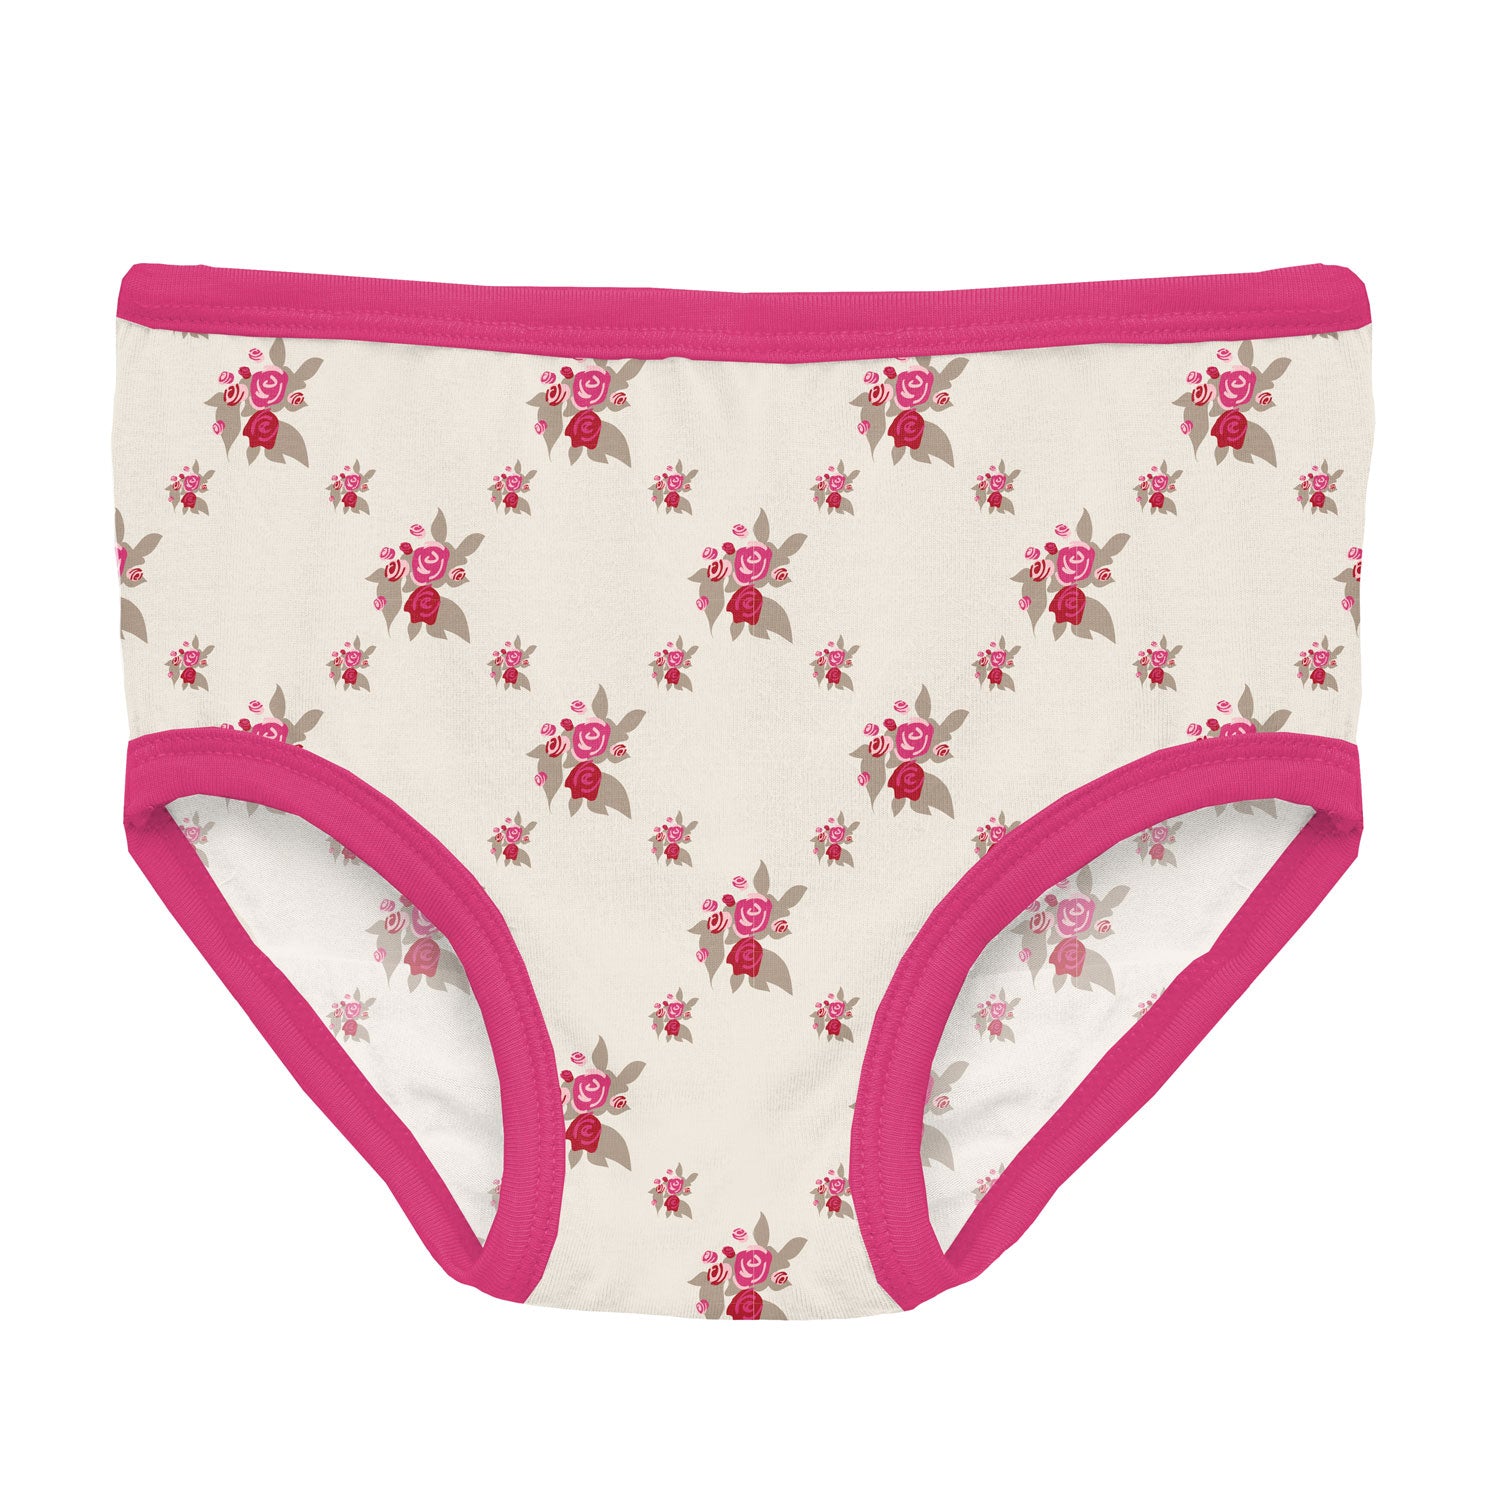 Kickee Pants Bamboo Girls Underwear - Natural Rose Trellis